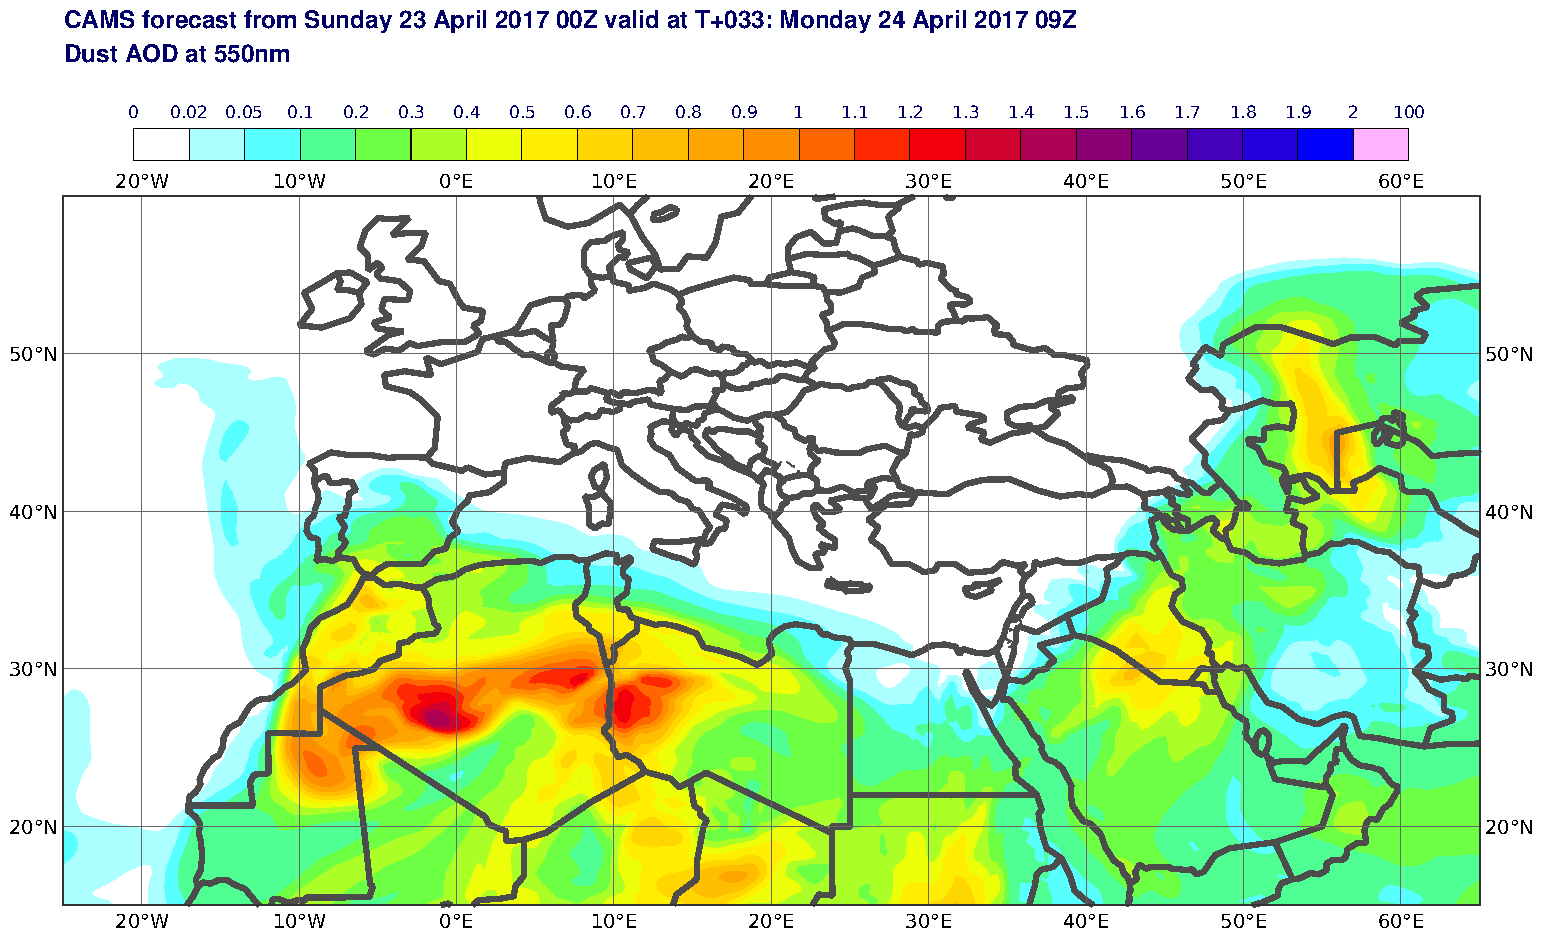 Dust AOD at 550nm valid at T33 - 2017-04-24 09:00